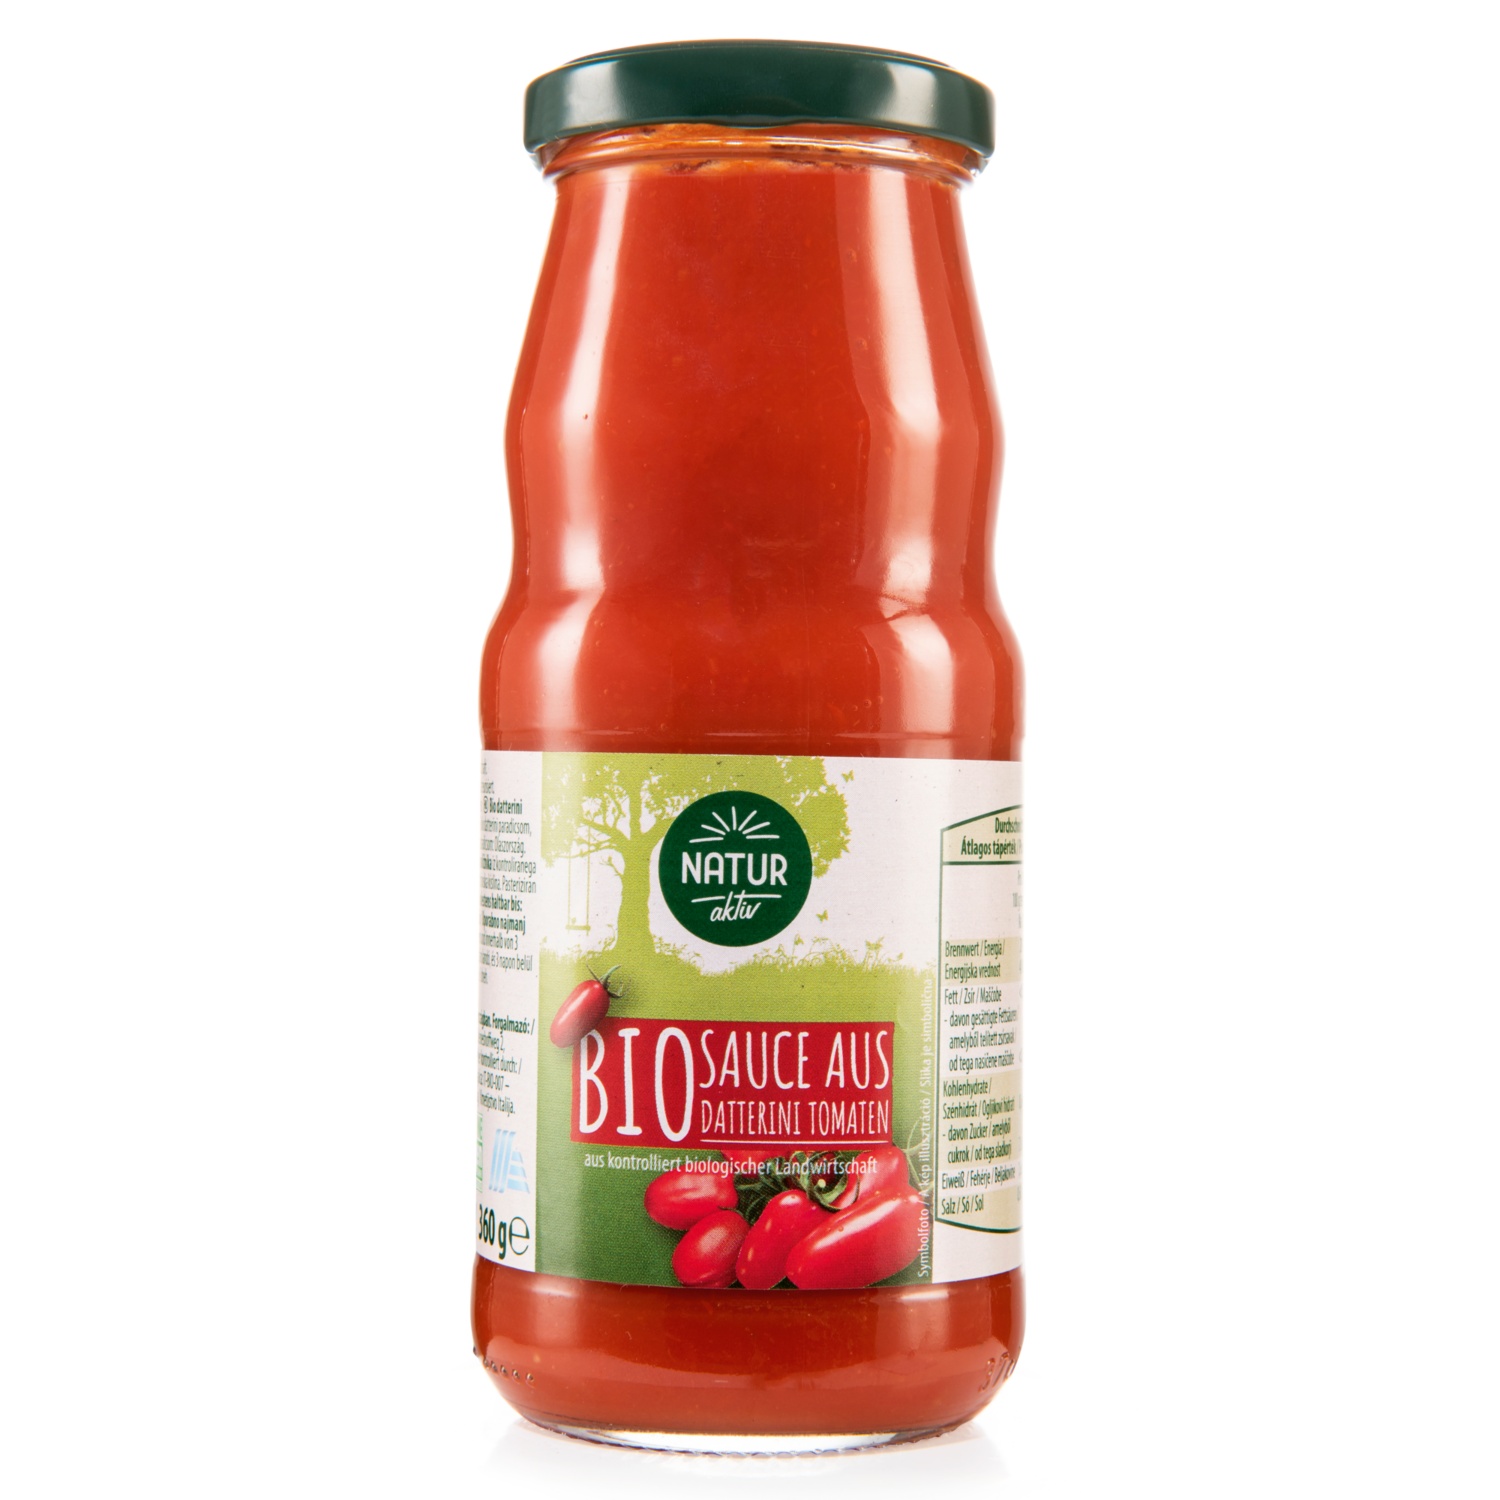 NATUR AKTIV BIO-Sauce aus Datterini Tomaten